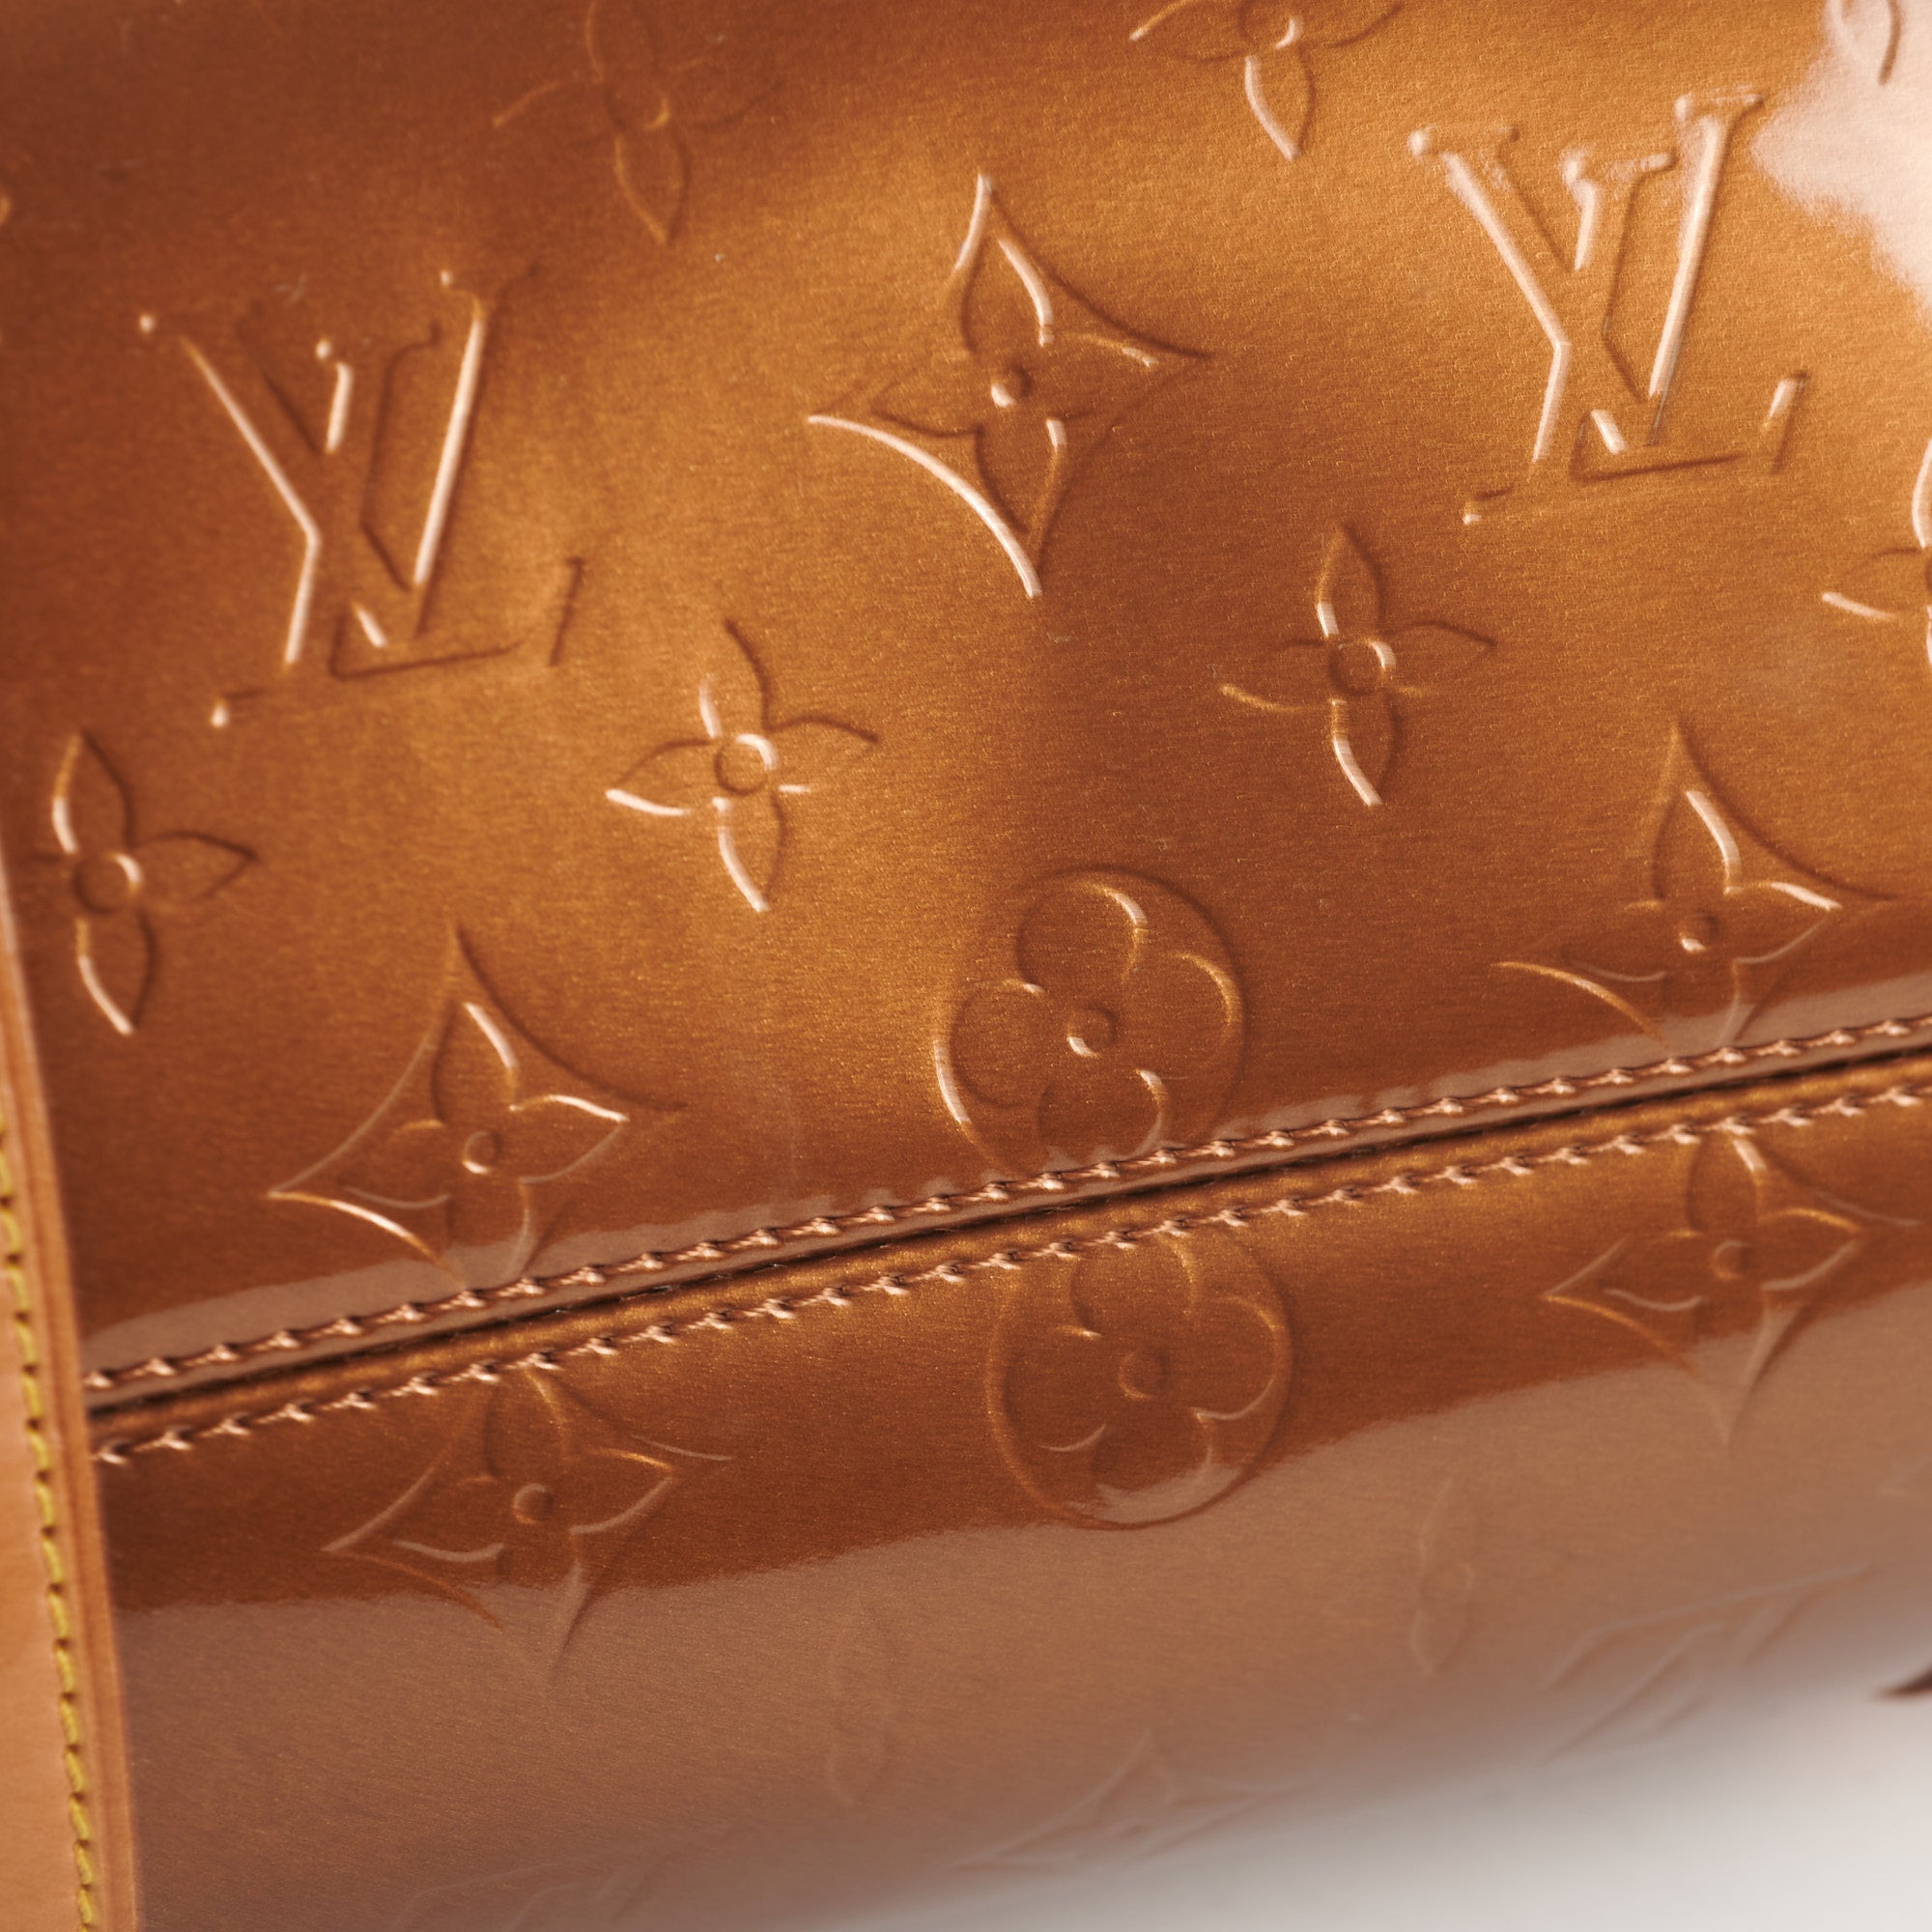 Louis Vuitton Monogram Vernis Bedford Bag Bronze at Jill's Consignment